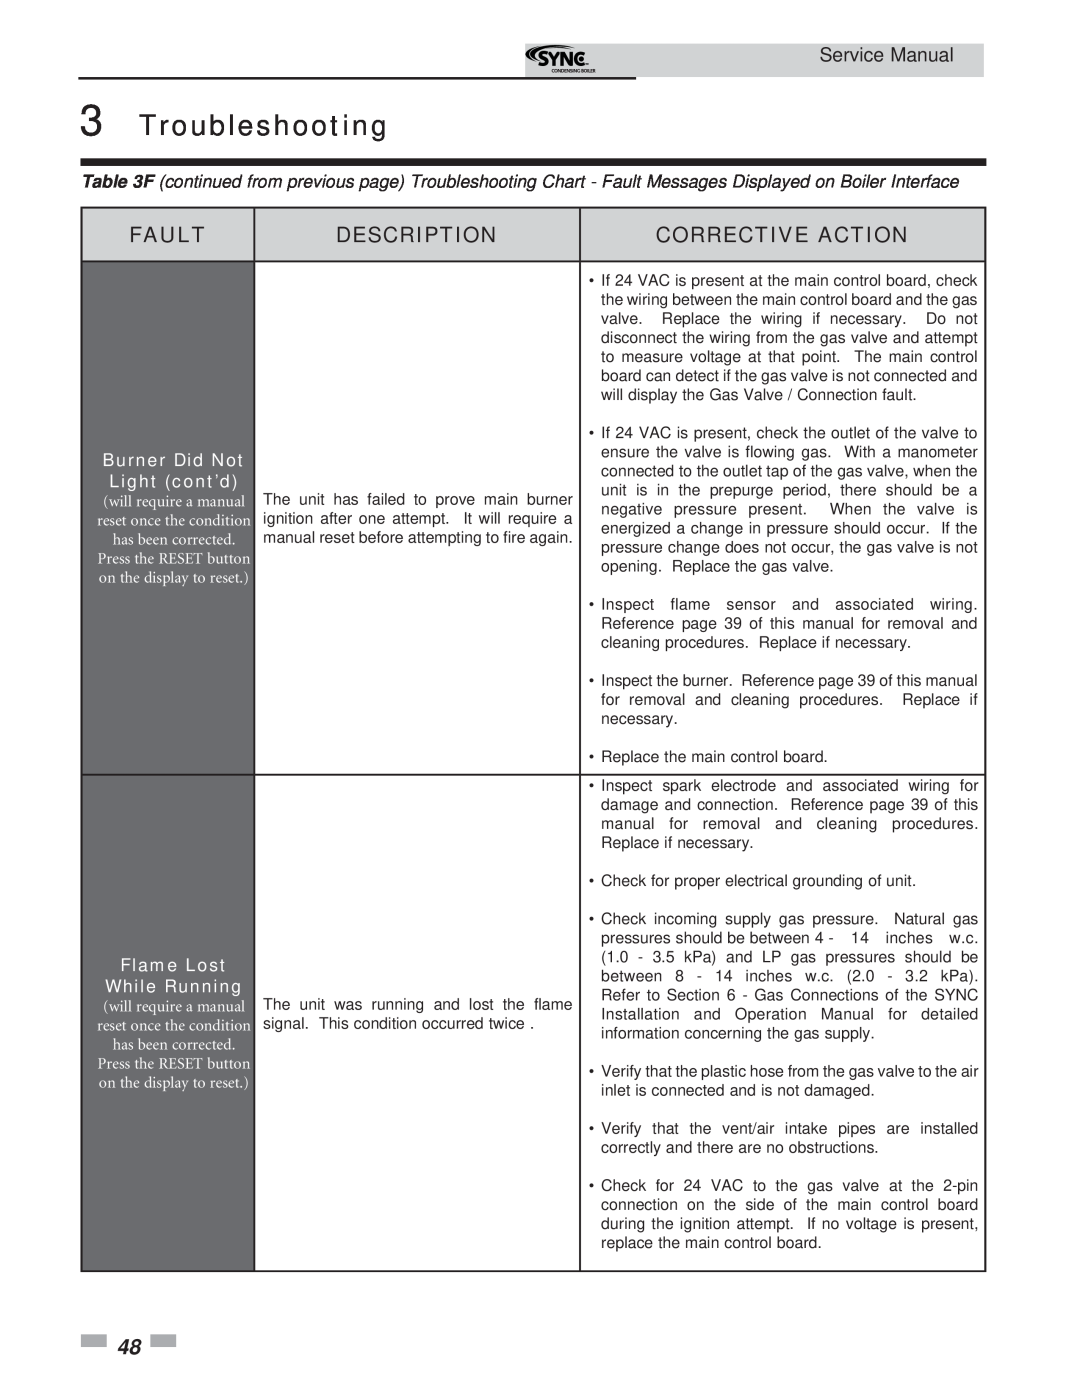 Lochinvar 1.3 service manual Troubleshooting, Fault, Description, Corrective Action, Service Manual 